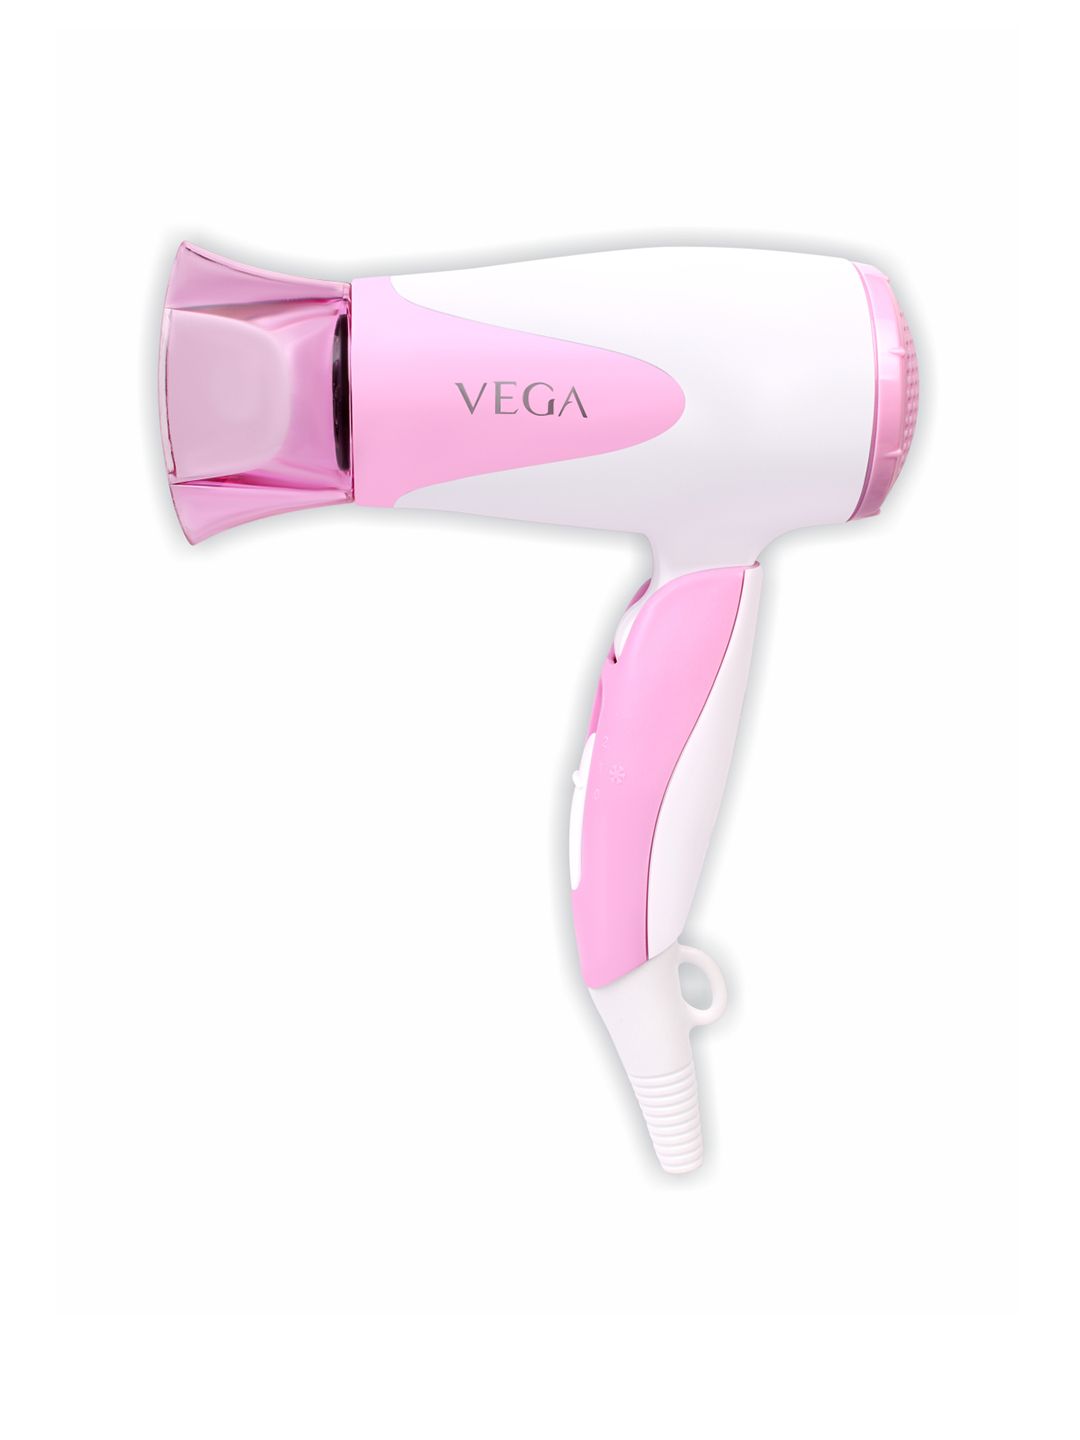 VEGA VHDH-05 Blooming Air 1000 Hair Dryer - Color May Vary Price in India